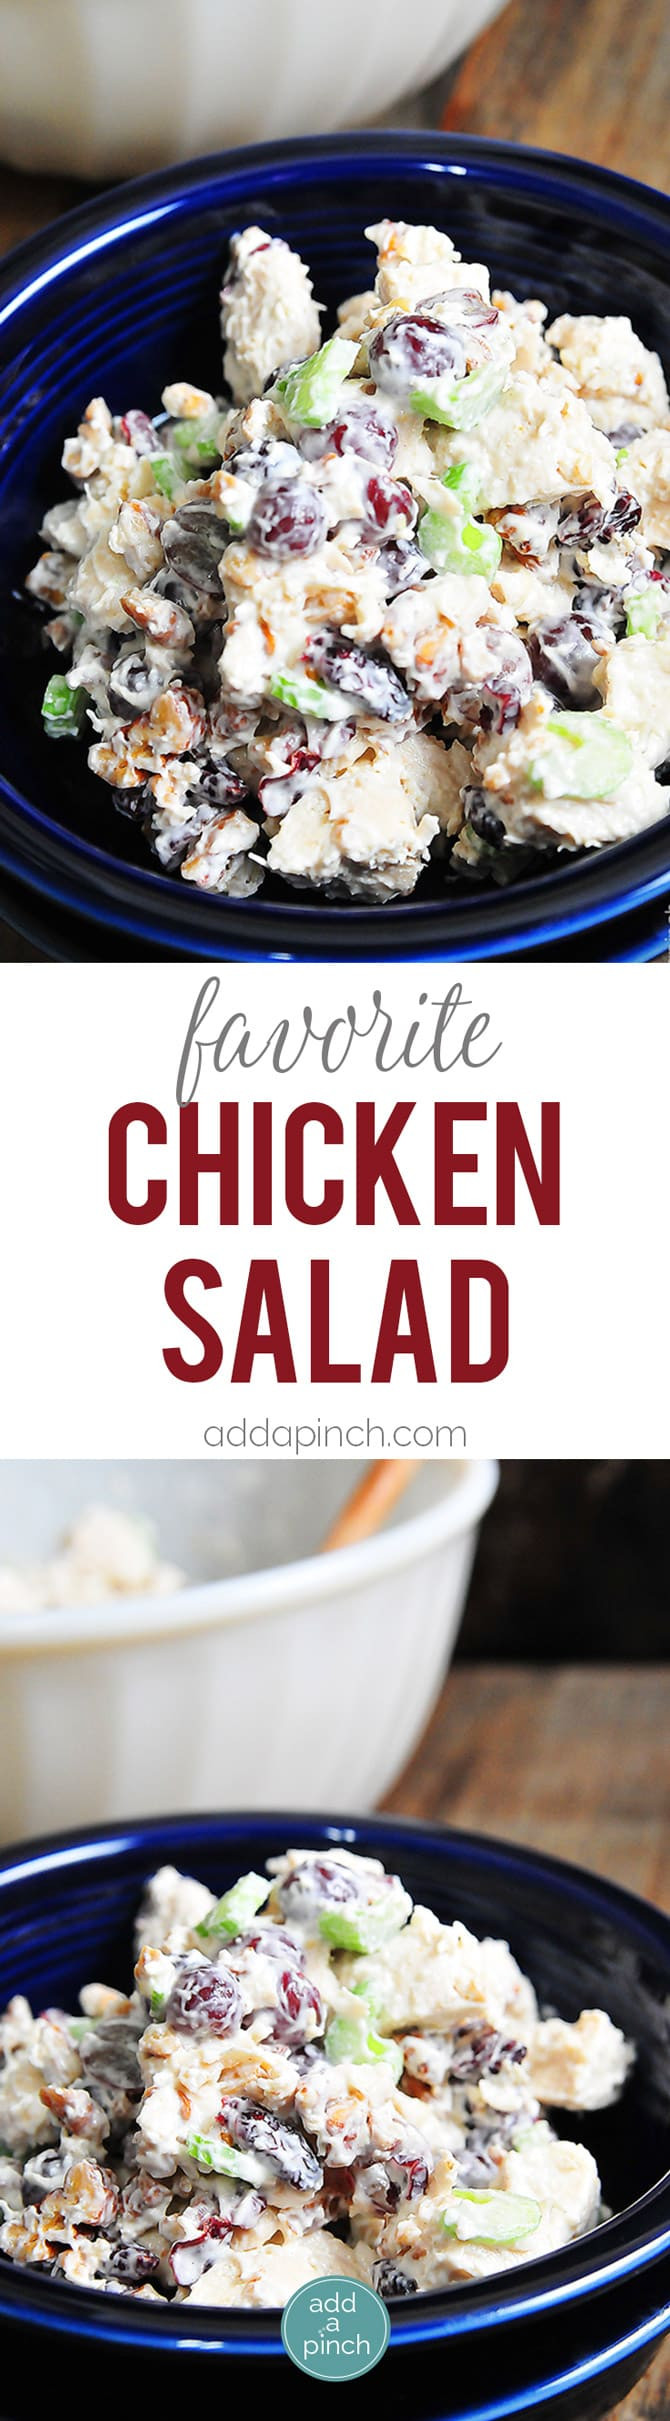 Easy Chicken Salad Recipe With Grapes
 Chicken Salad with Grapes Recipe Cooking